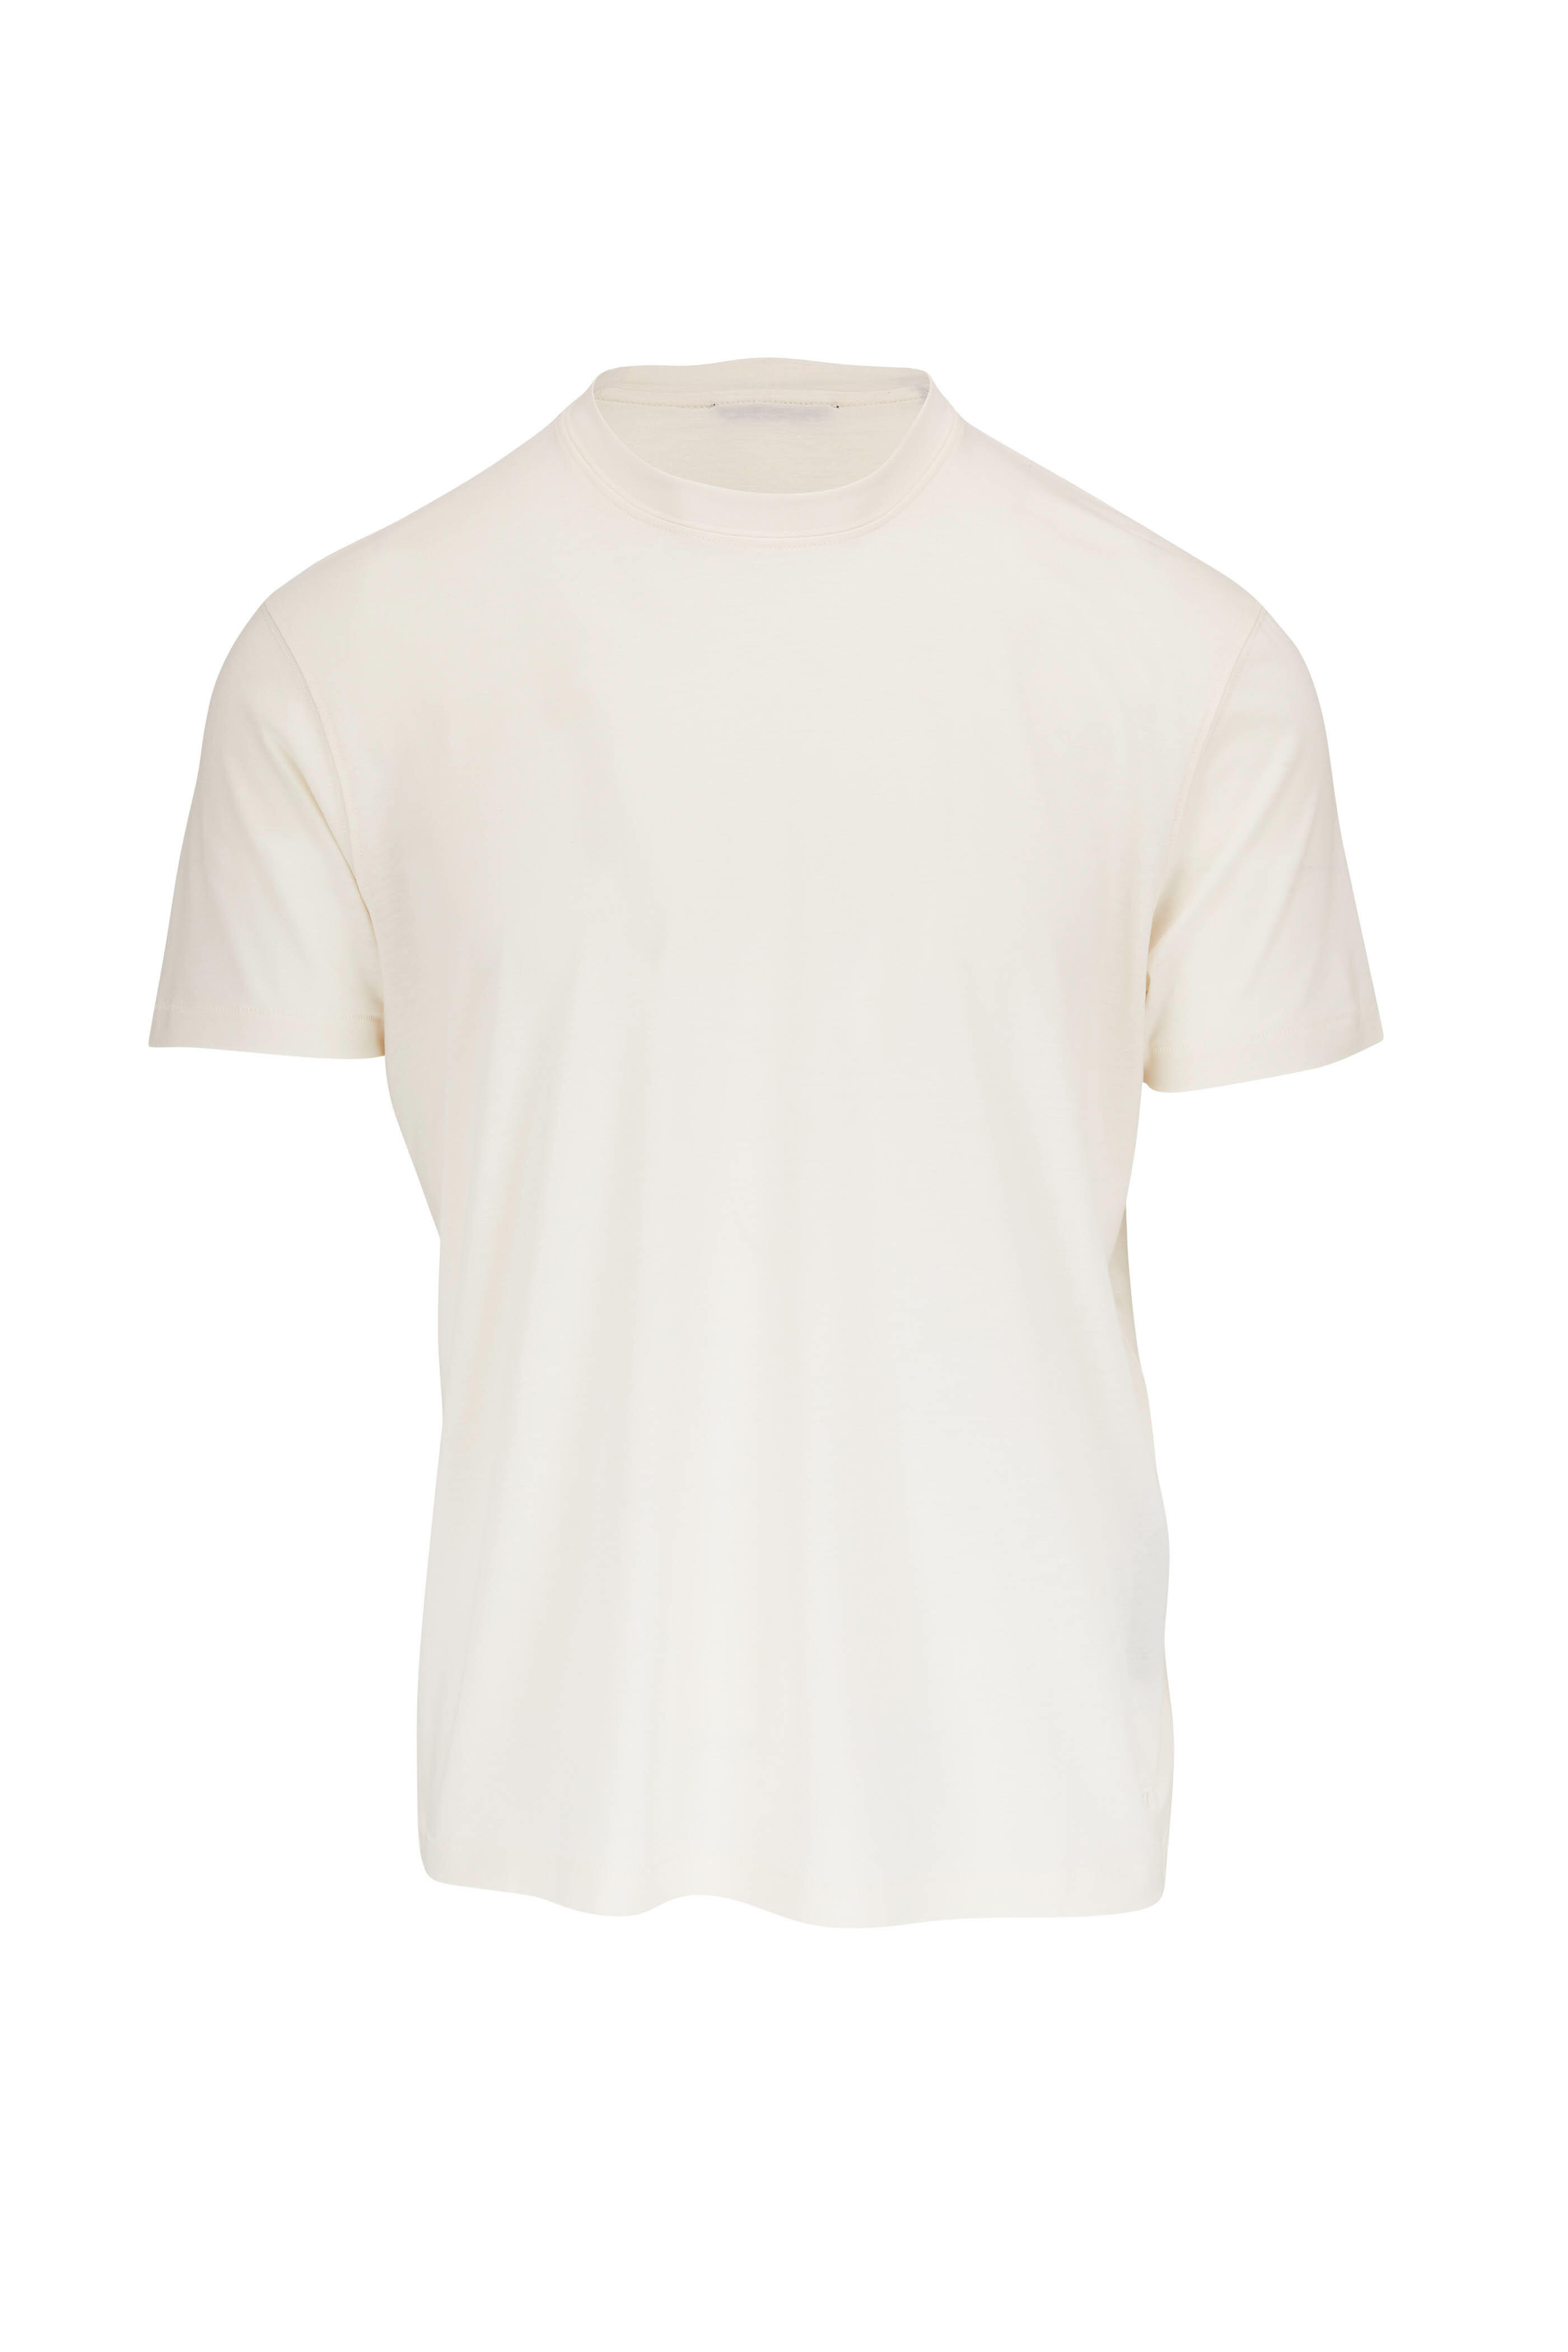 Tom Ford - Cream Crewneck T-Shirt | Mitchell Stores